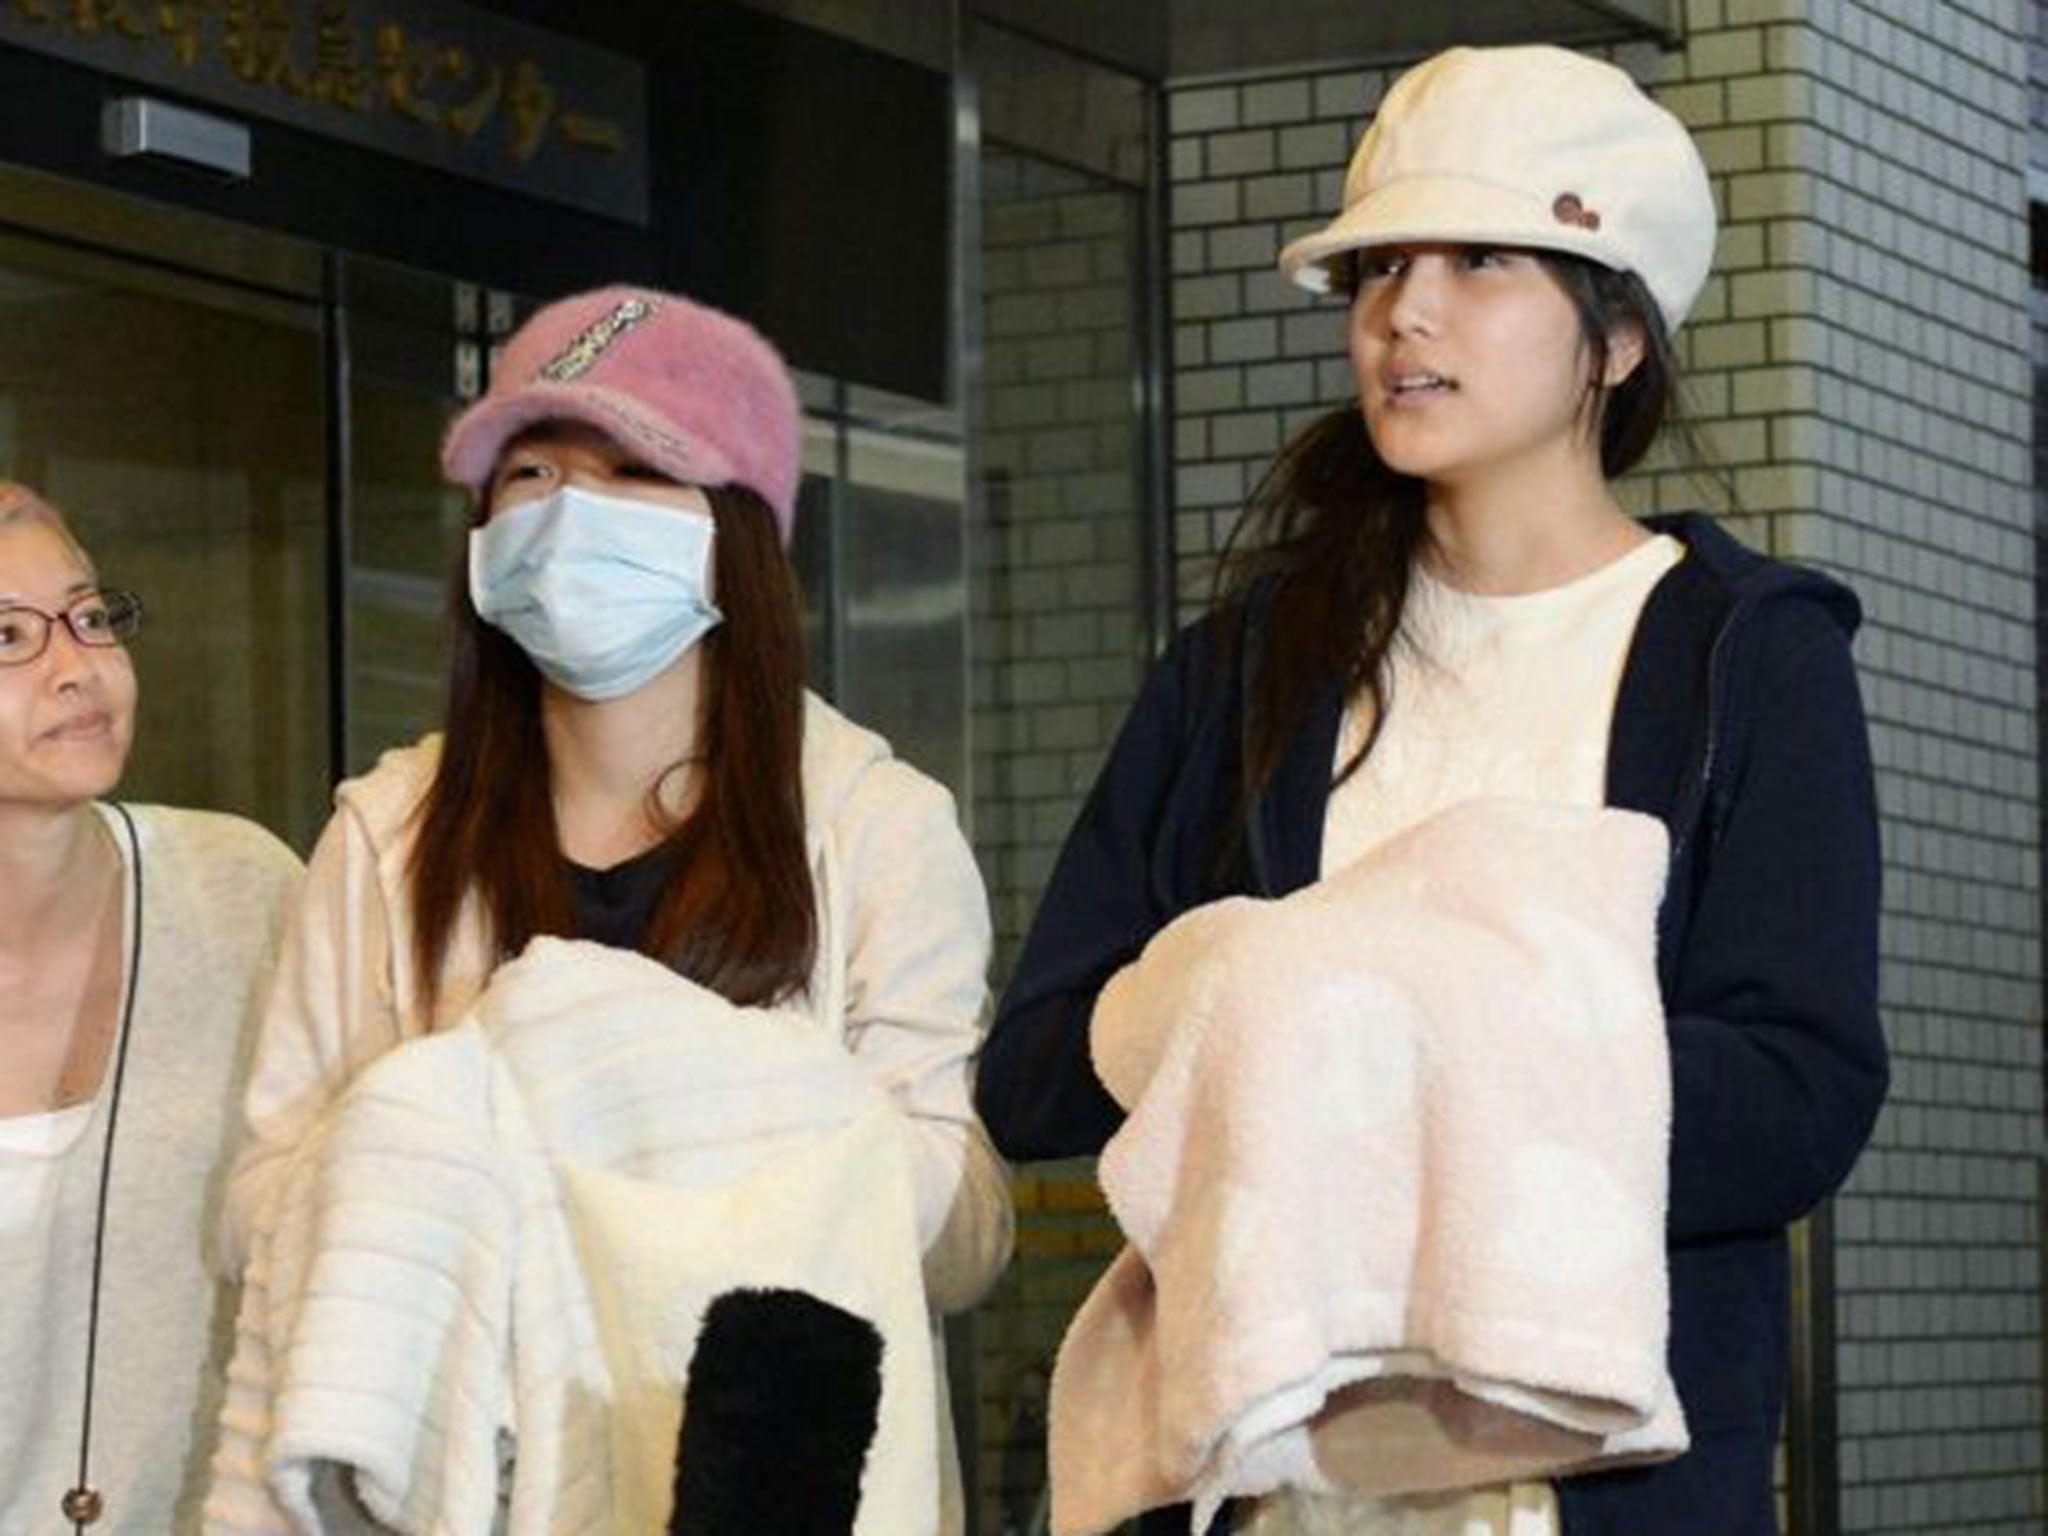 Rina Kawaei and Anna Iriyama were discharged from hospital